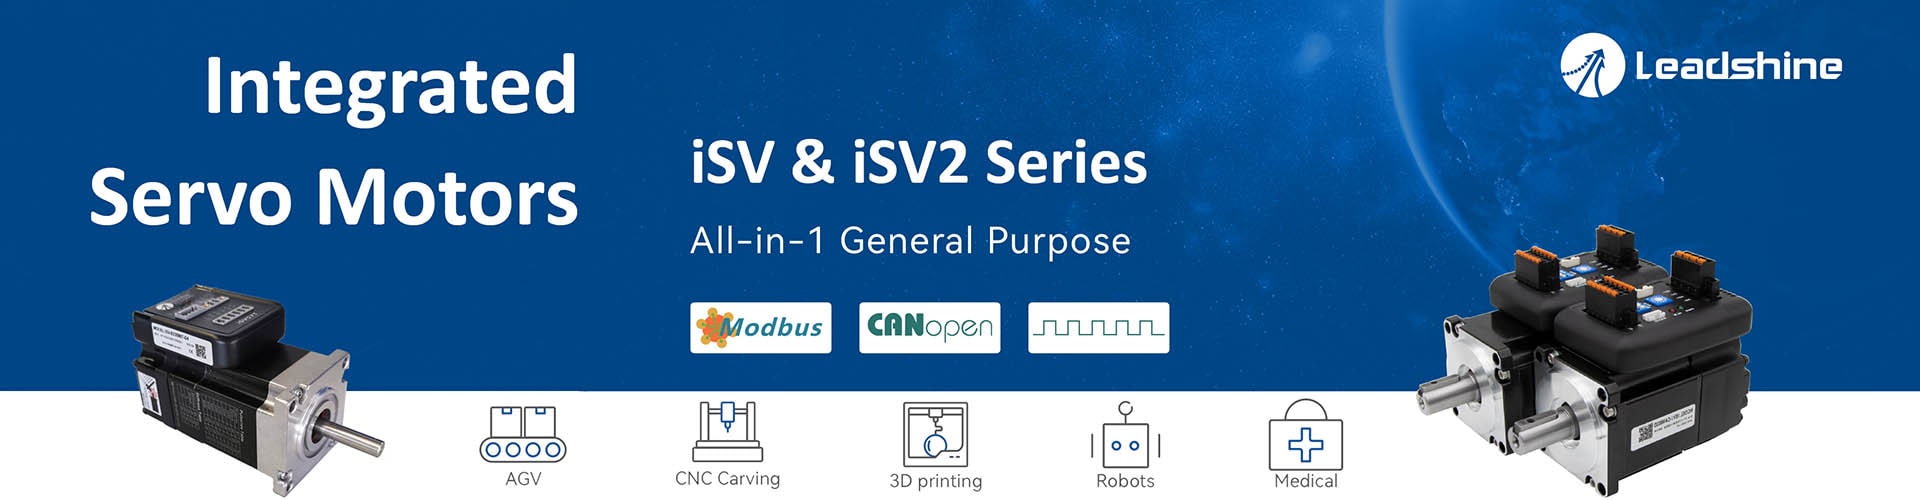 isv-integrated-servo-banner